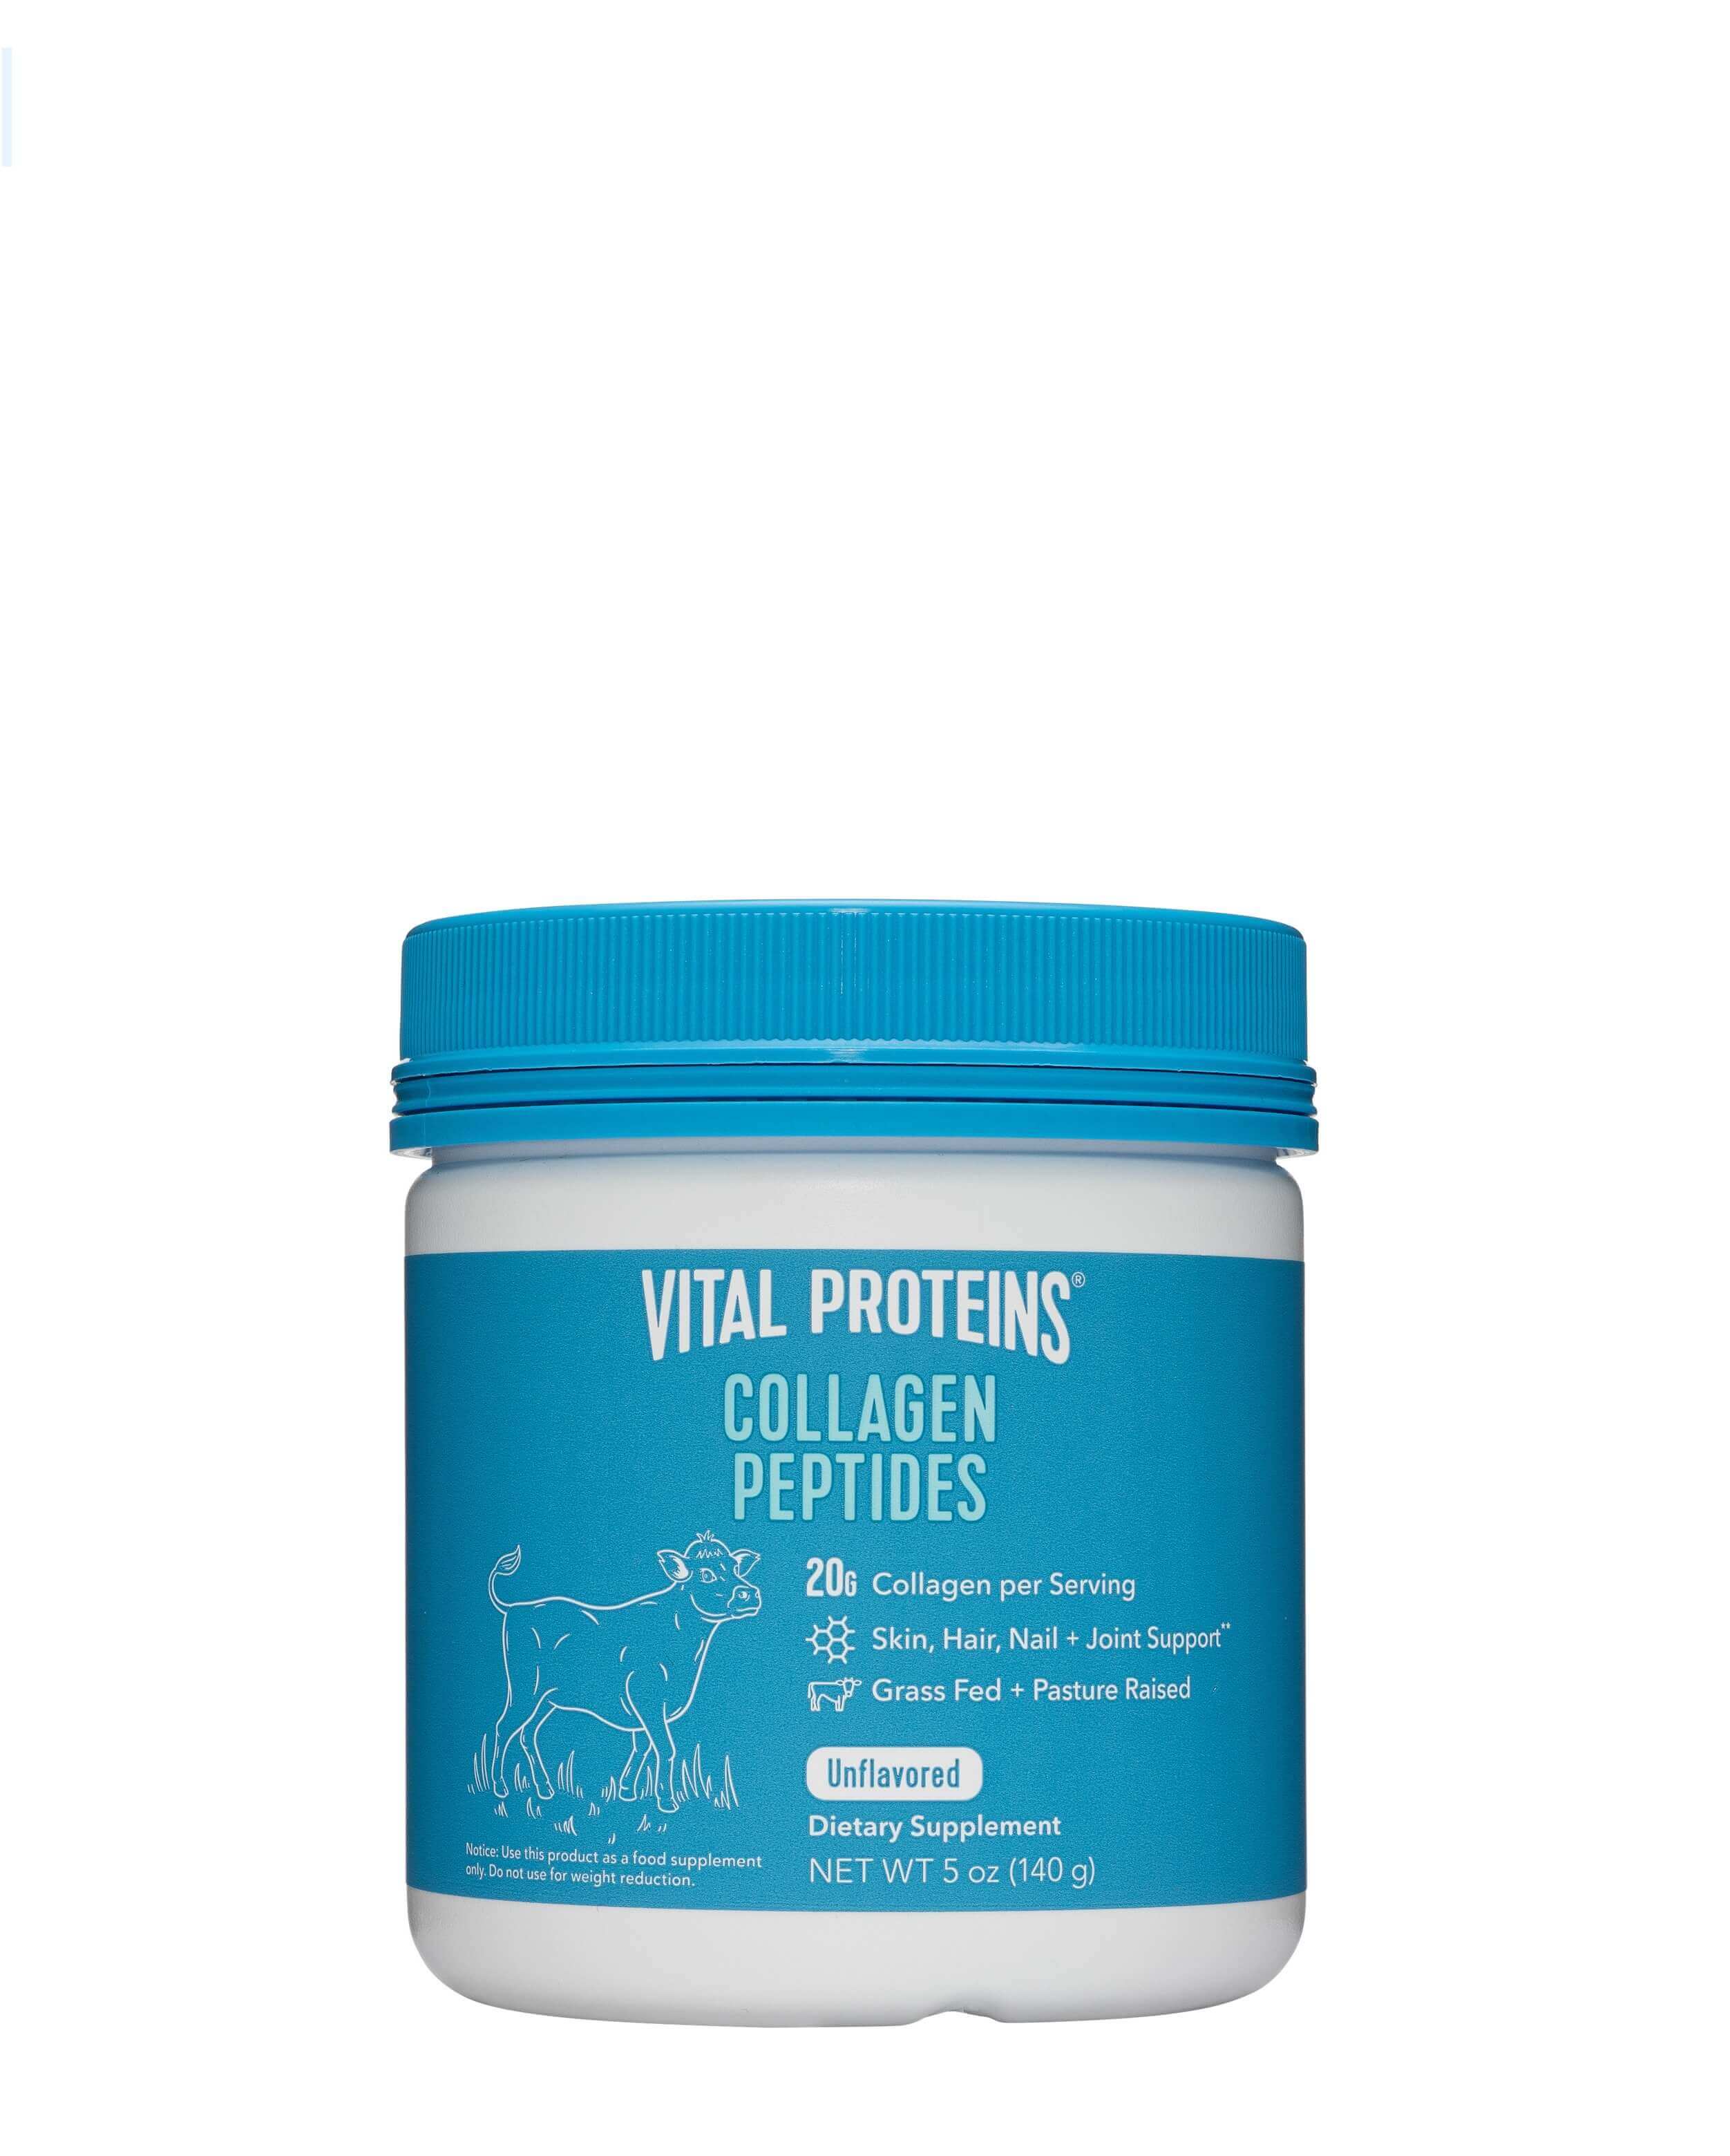 Пептид коллагена цена. Коллаген пептид Виталь. Коллаген пептидный Vital Proteins. Vital-Proteins-Collagen-Peptides-Unflavored-1-25-lbs-567-g. Коллаген пептид bellalab.